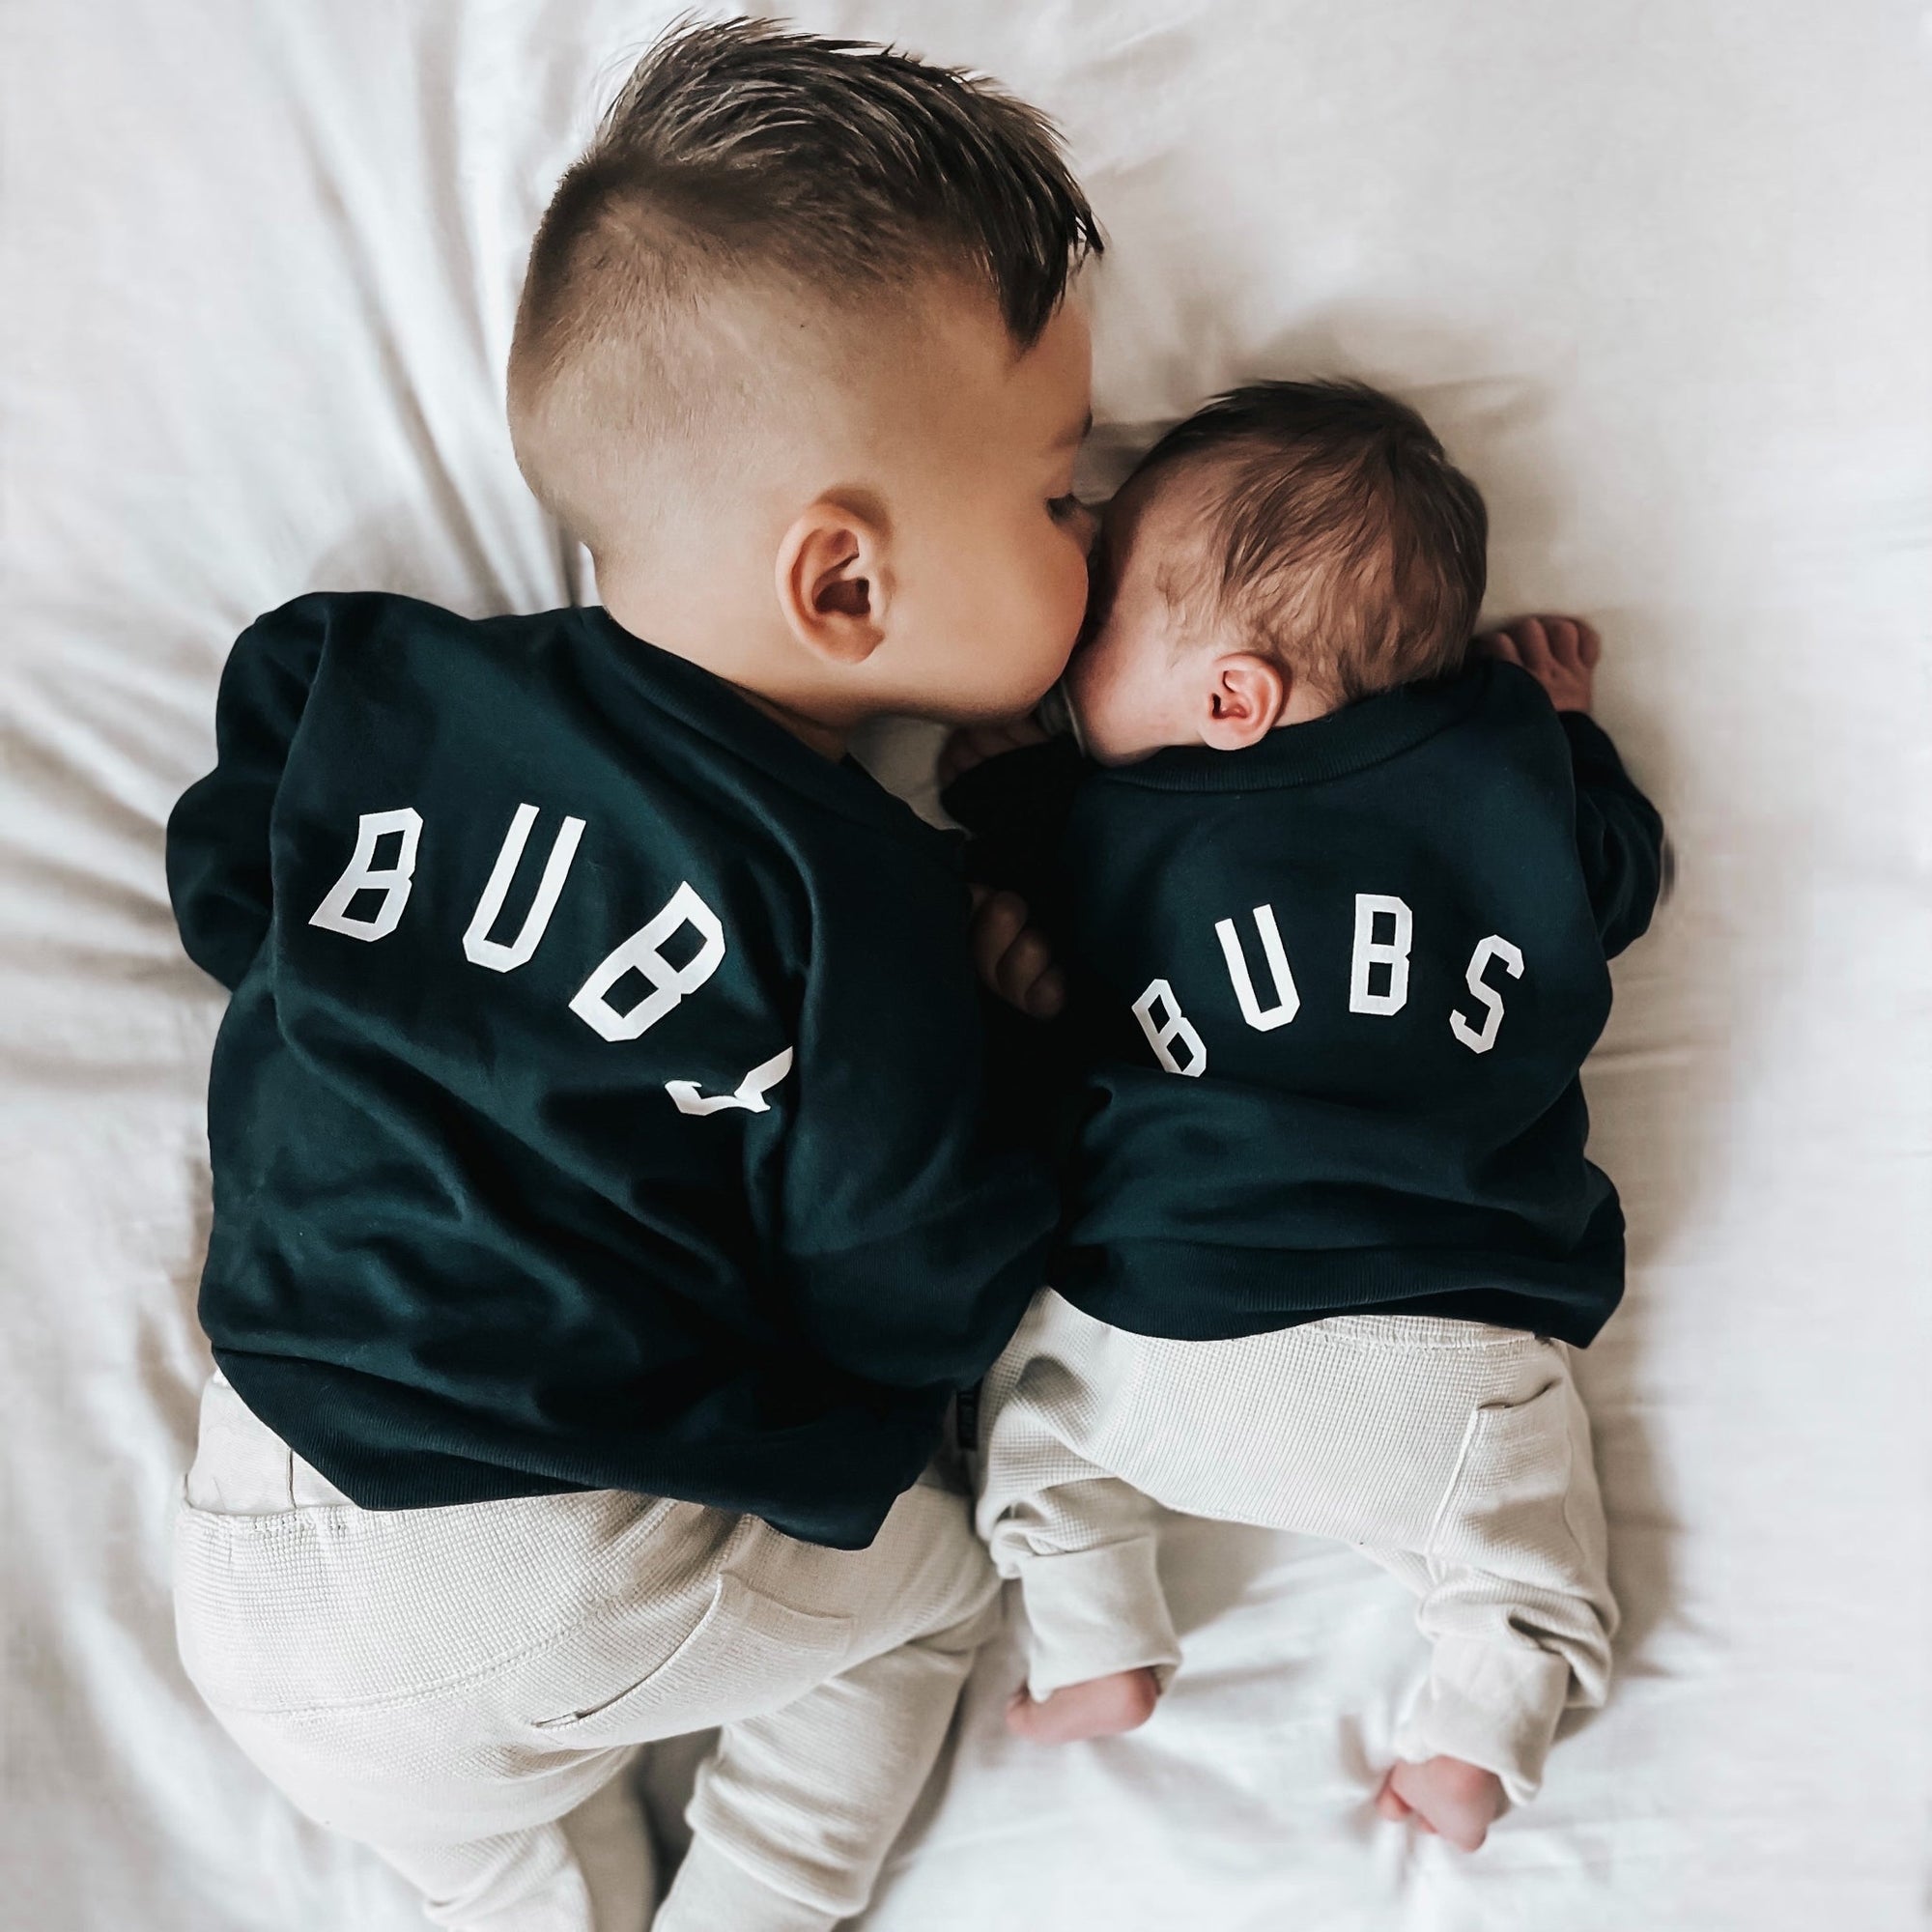 Baby Black "Bubs™" Everyday Boys Sweatshirt - Ford And Wyatt